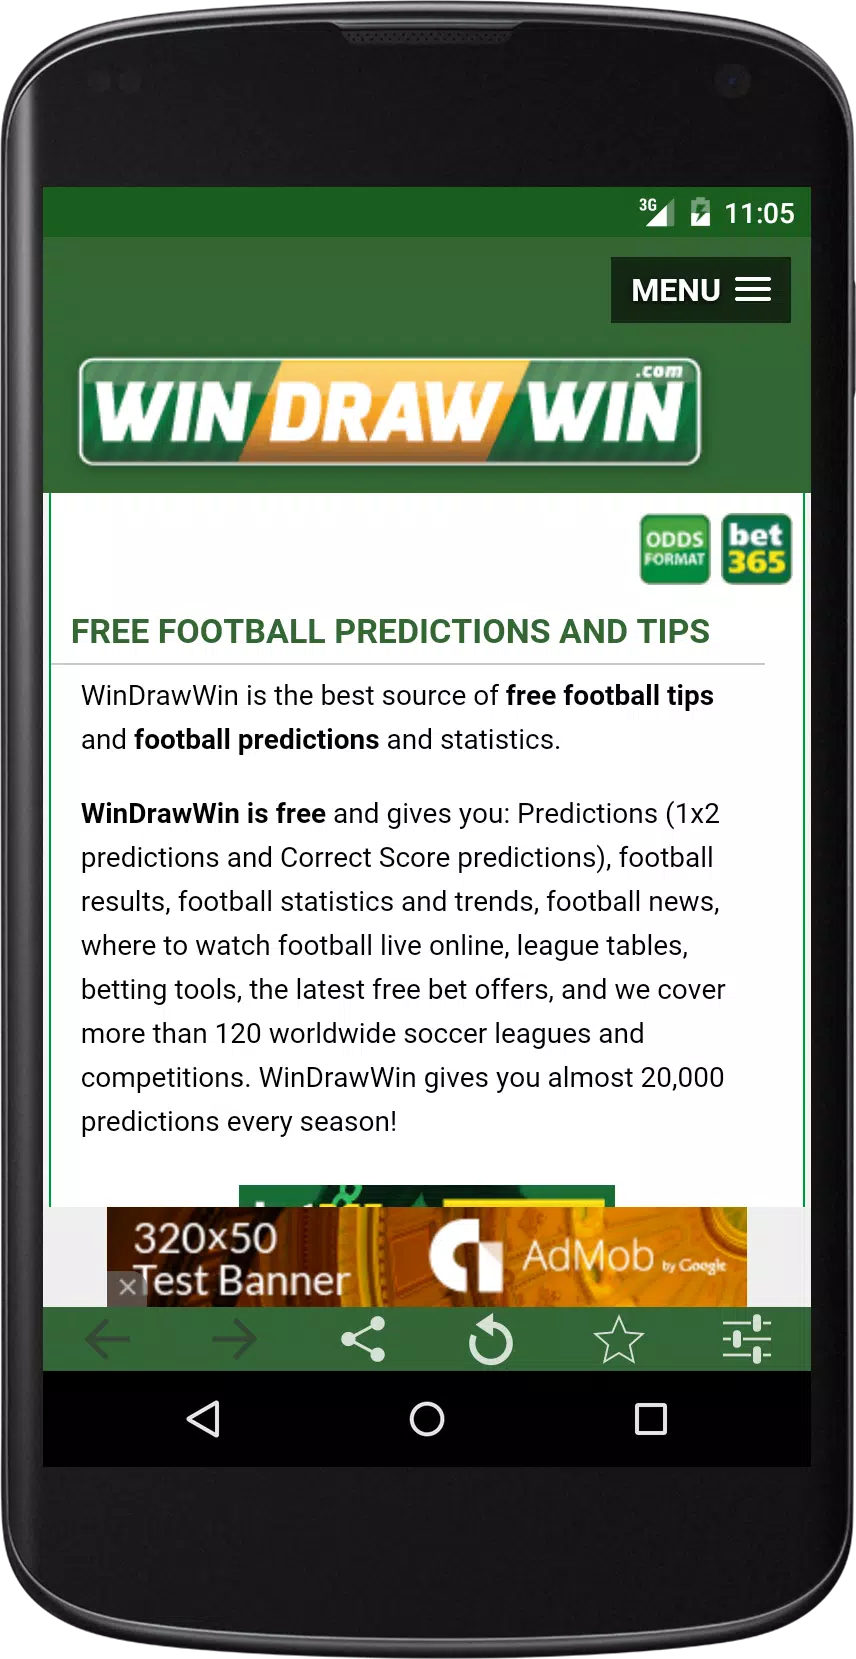 WinDrawWin.com Profile - Sports Betting Picks - CapperTek